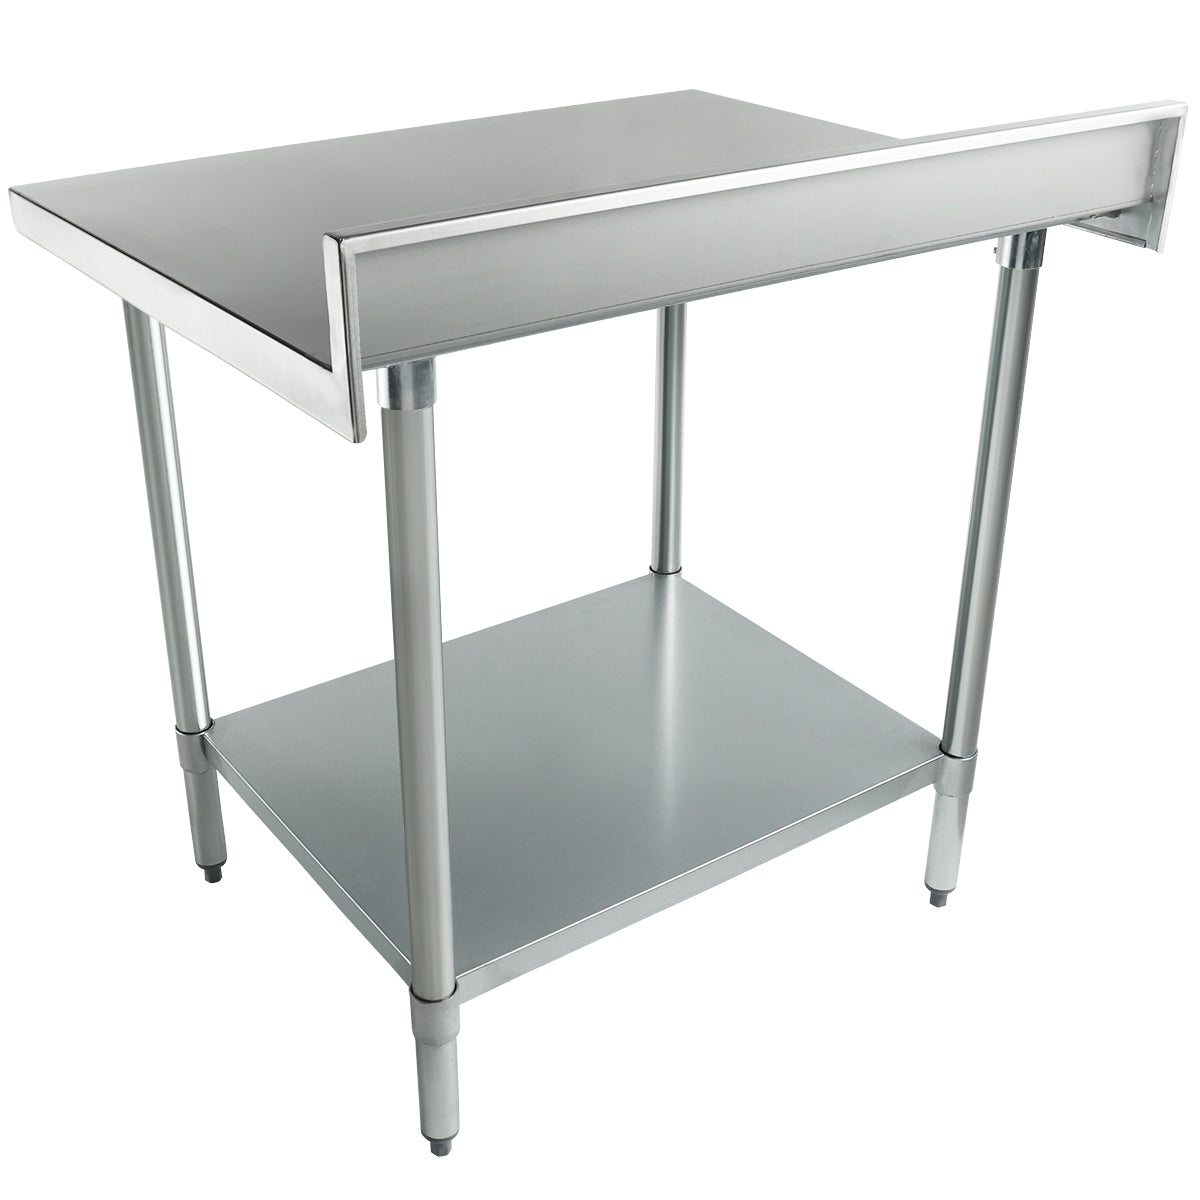 Empura 36" x 30" 18-Gauge 304 Stainless Steel Commercial Work Table with 4" Backsplash Galvanized Legs and Undershelf